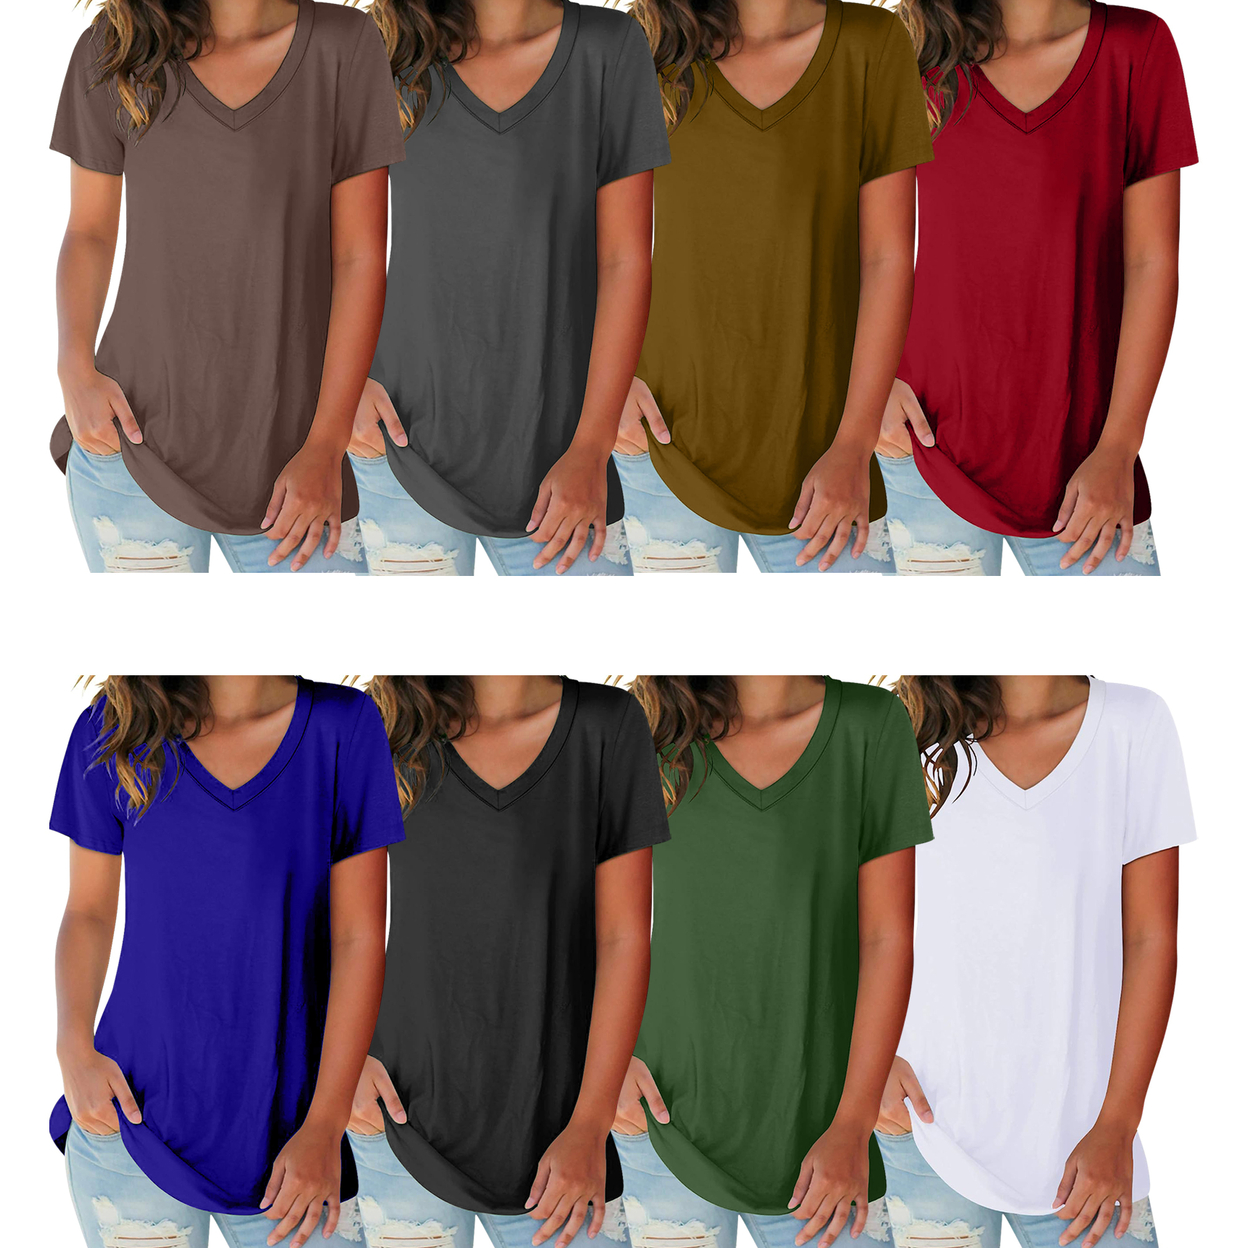 6-Pack: Women's Ultra Soft Smooth Cotton Blend Basic V-Neck Short Sleeve Shirts - Large